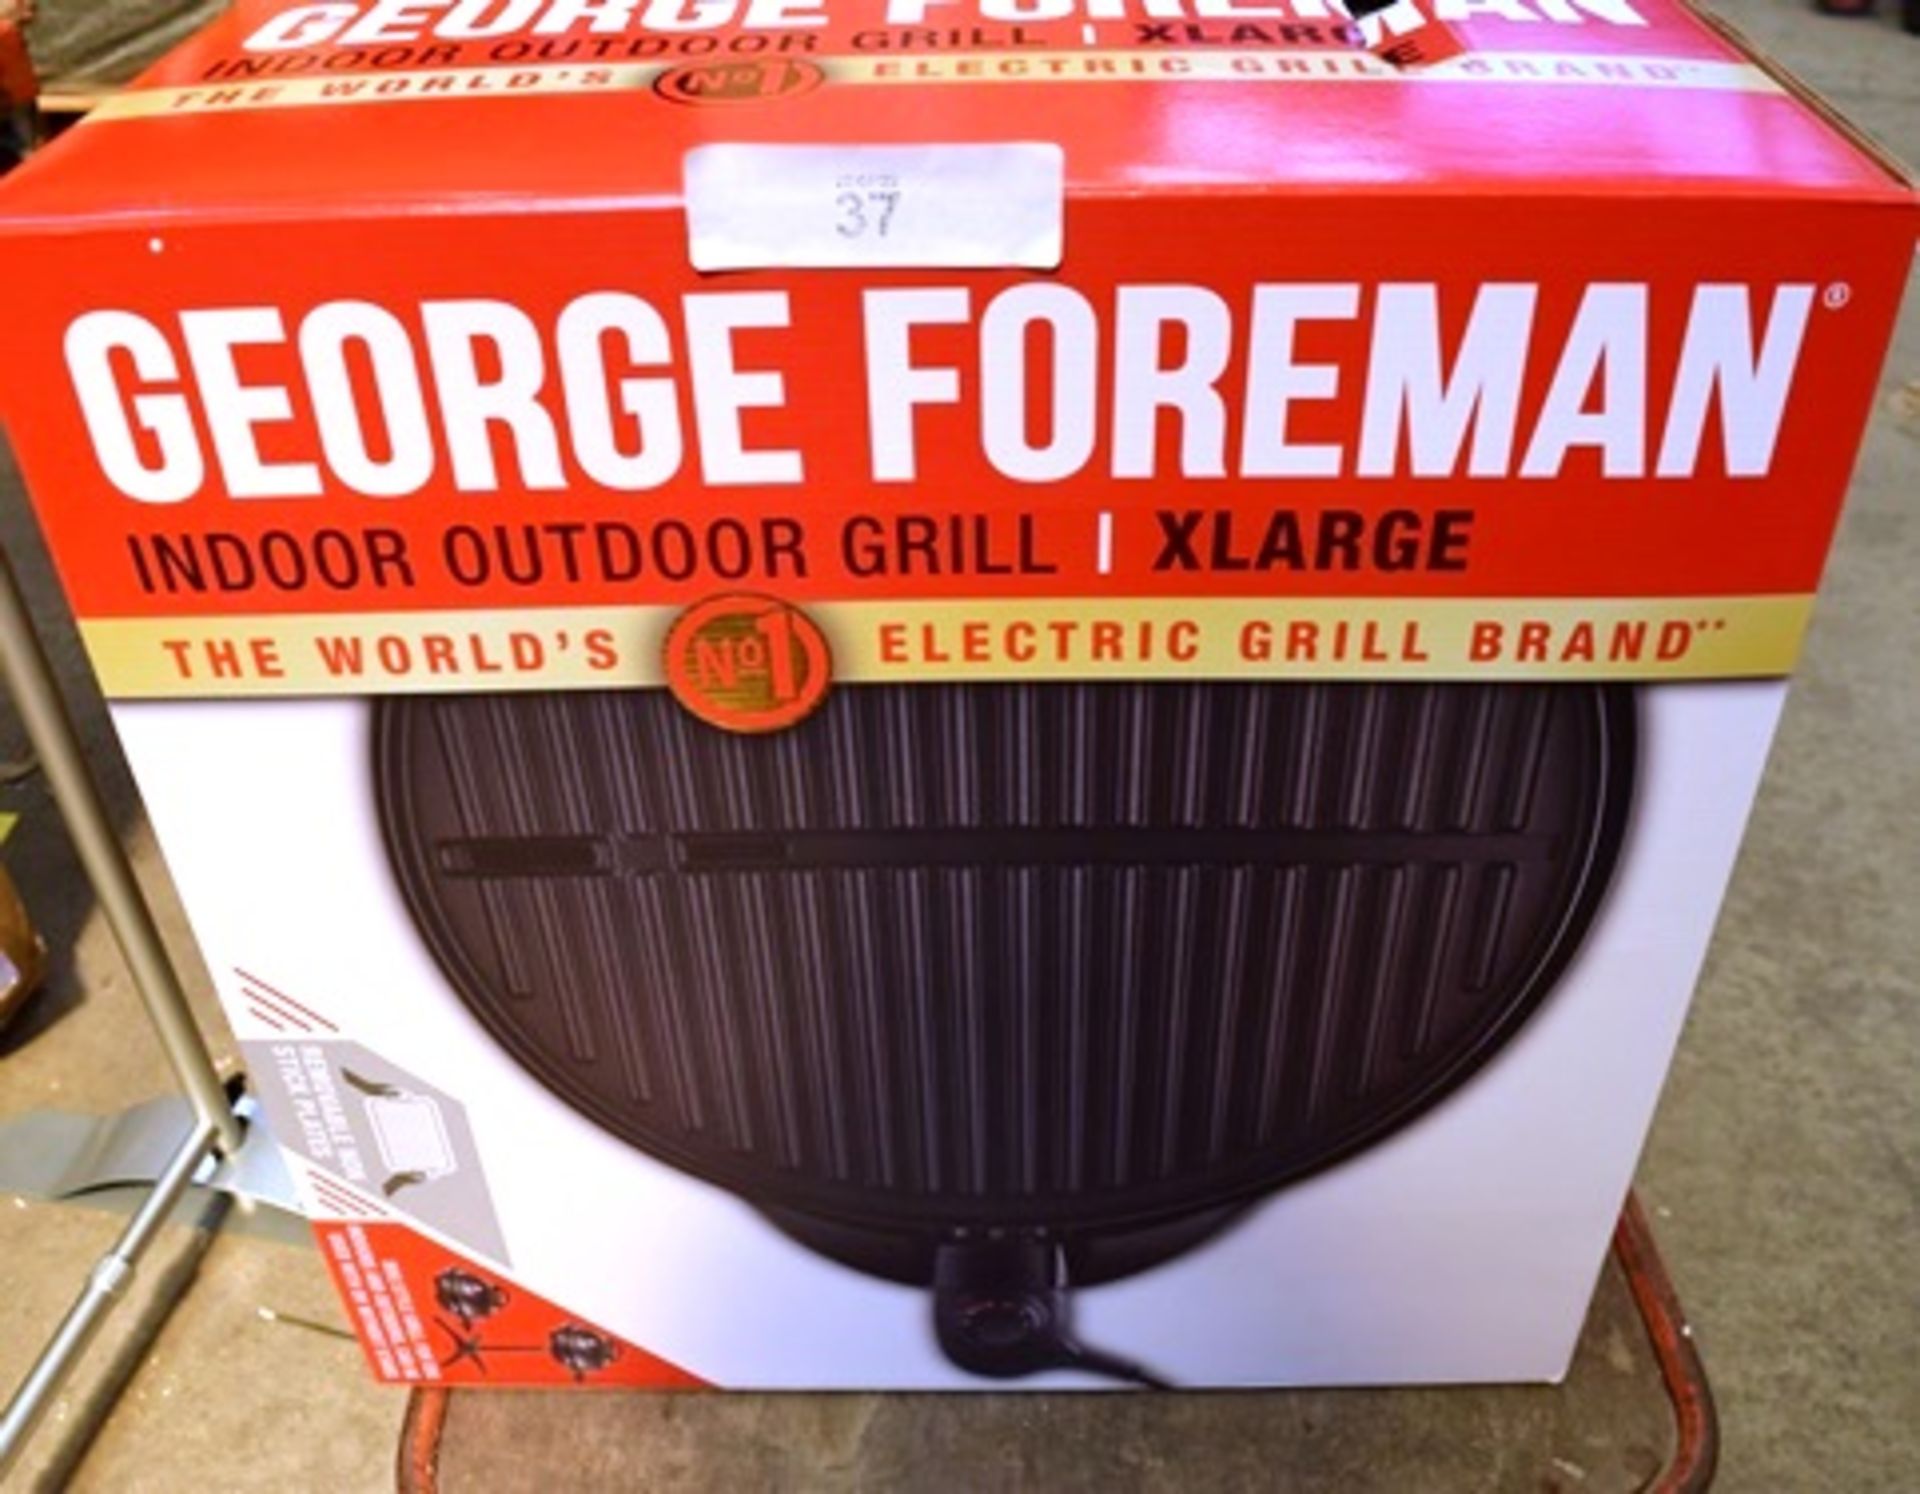 2 x George Foreman indoor/outdoor grills, model 22460 - New (ES9end) - Image 2 of 2